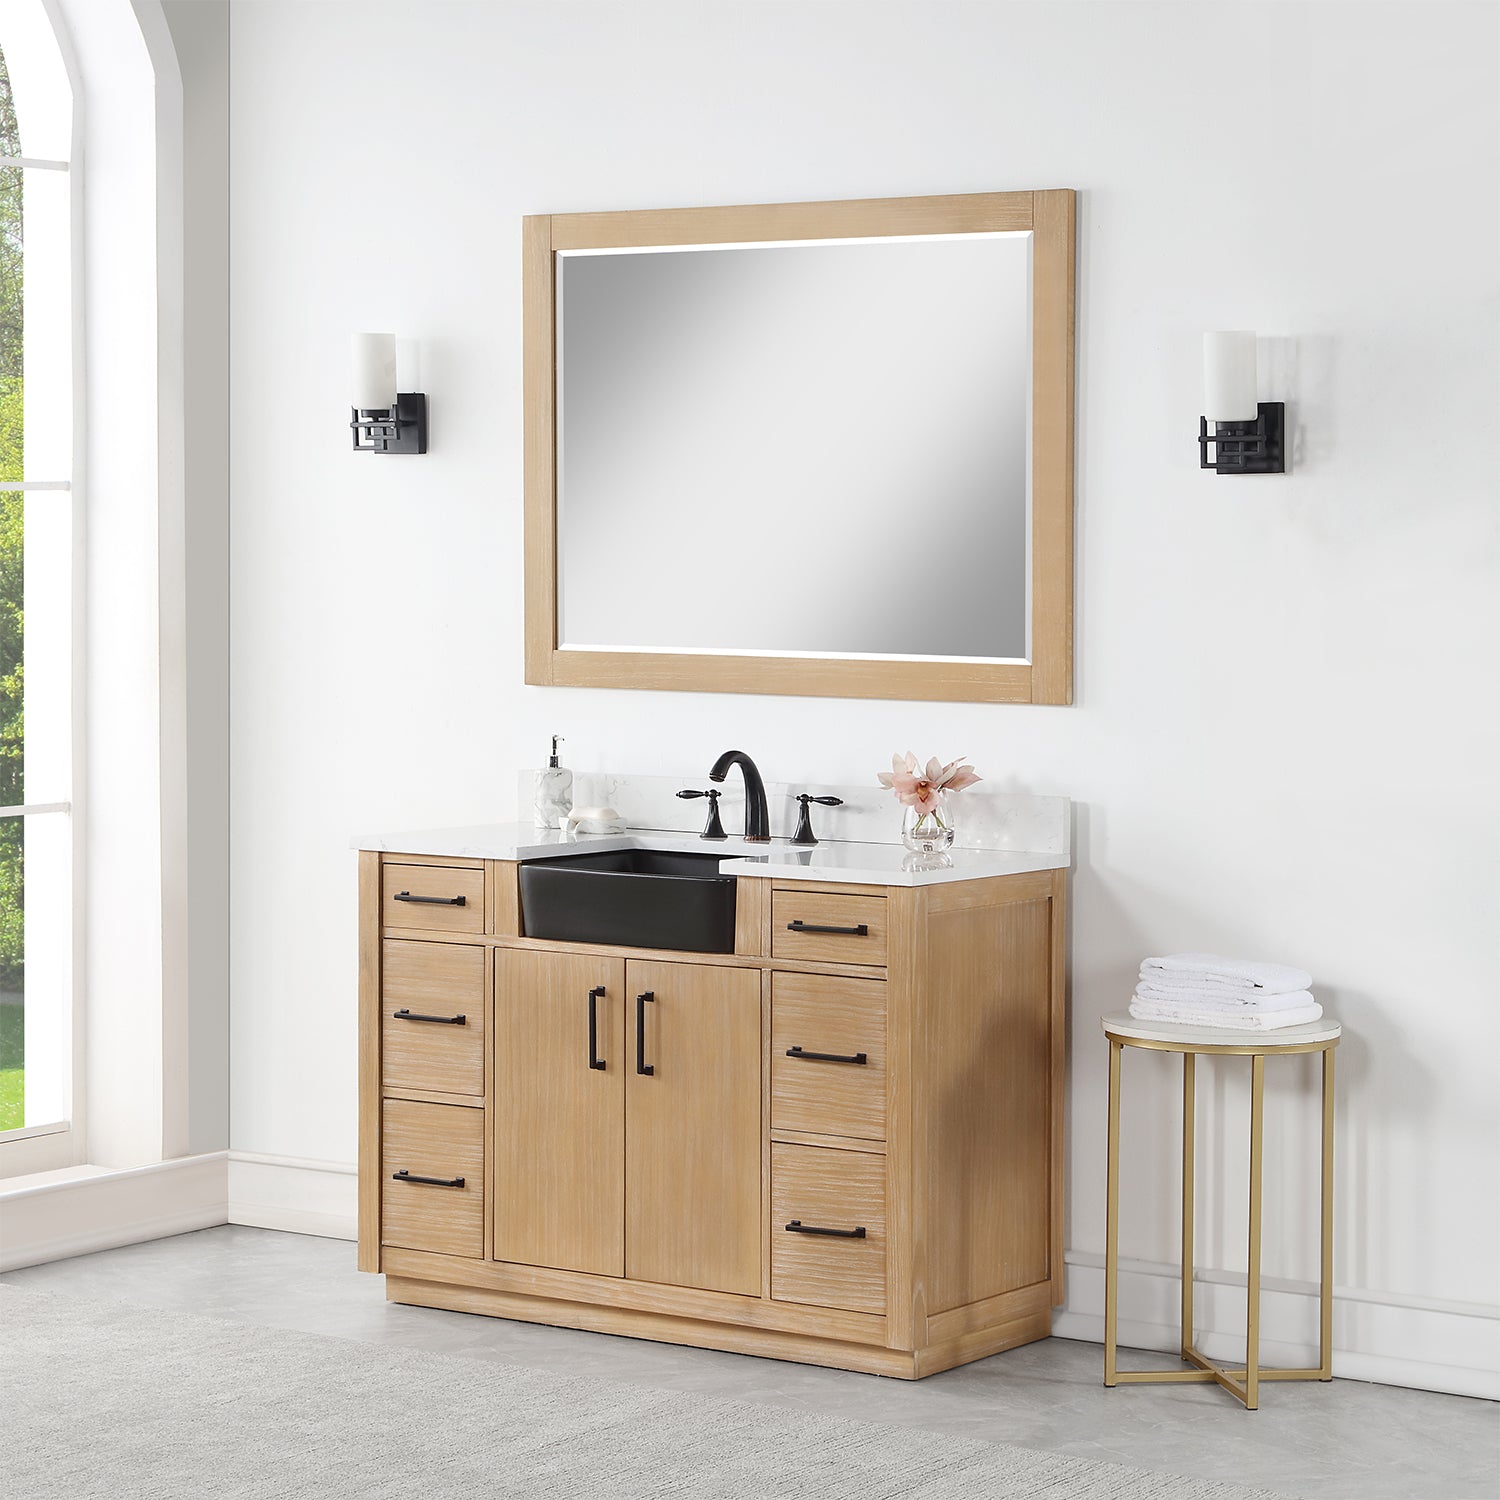 Novago 48" Single Bathroom Vanity Set with Composite Aosta White Stone Countertop and Farmhouse Sink